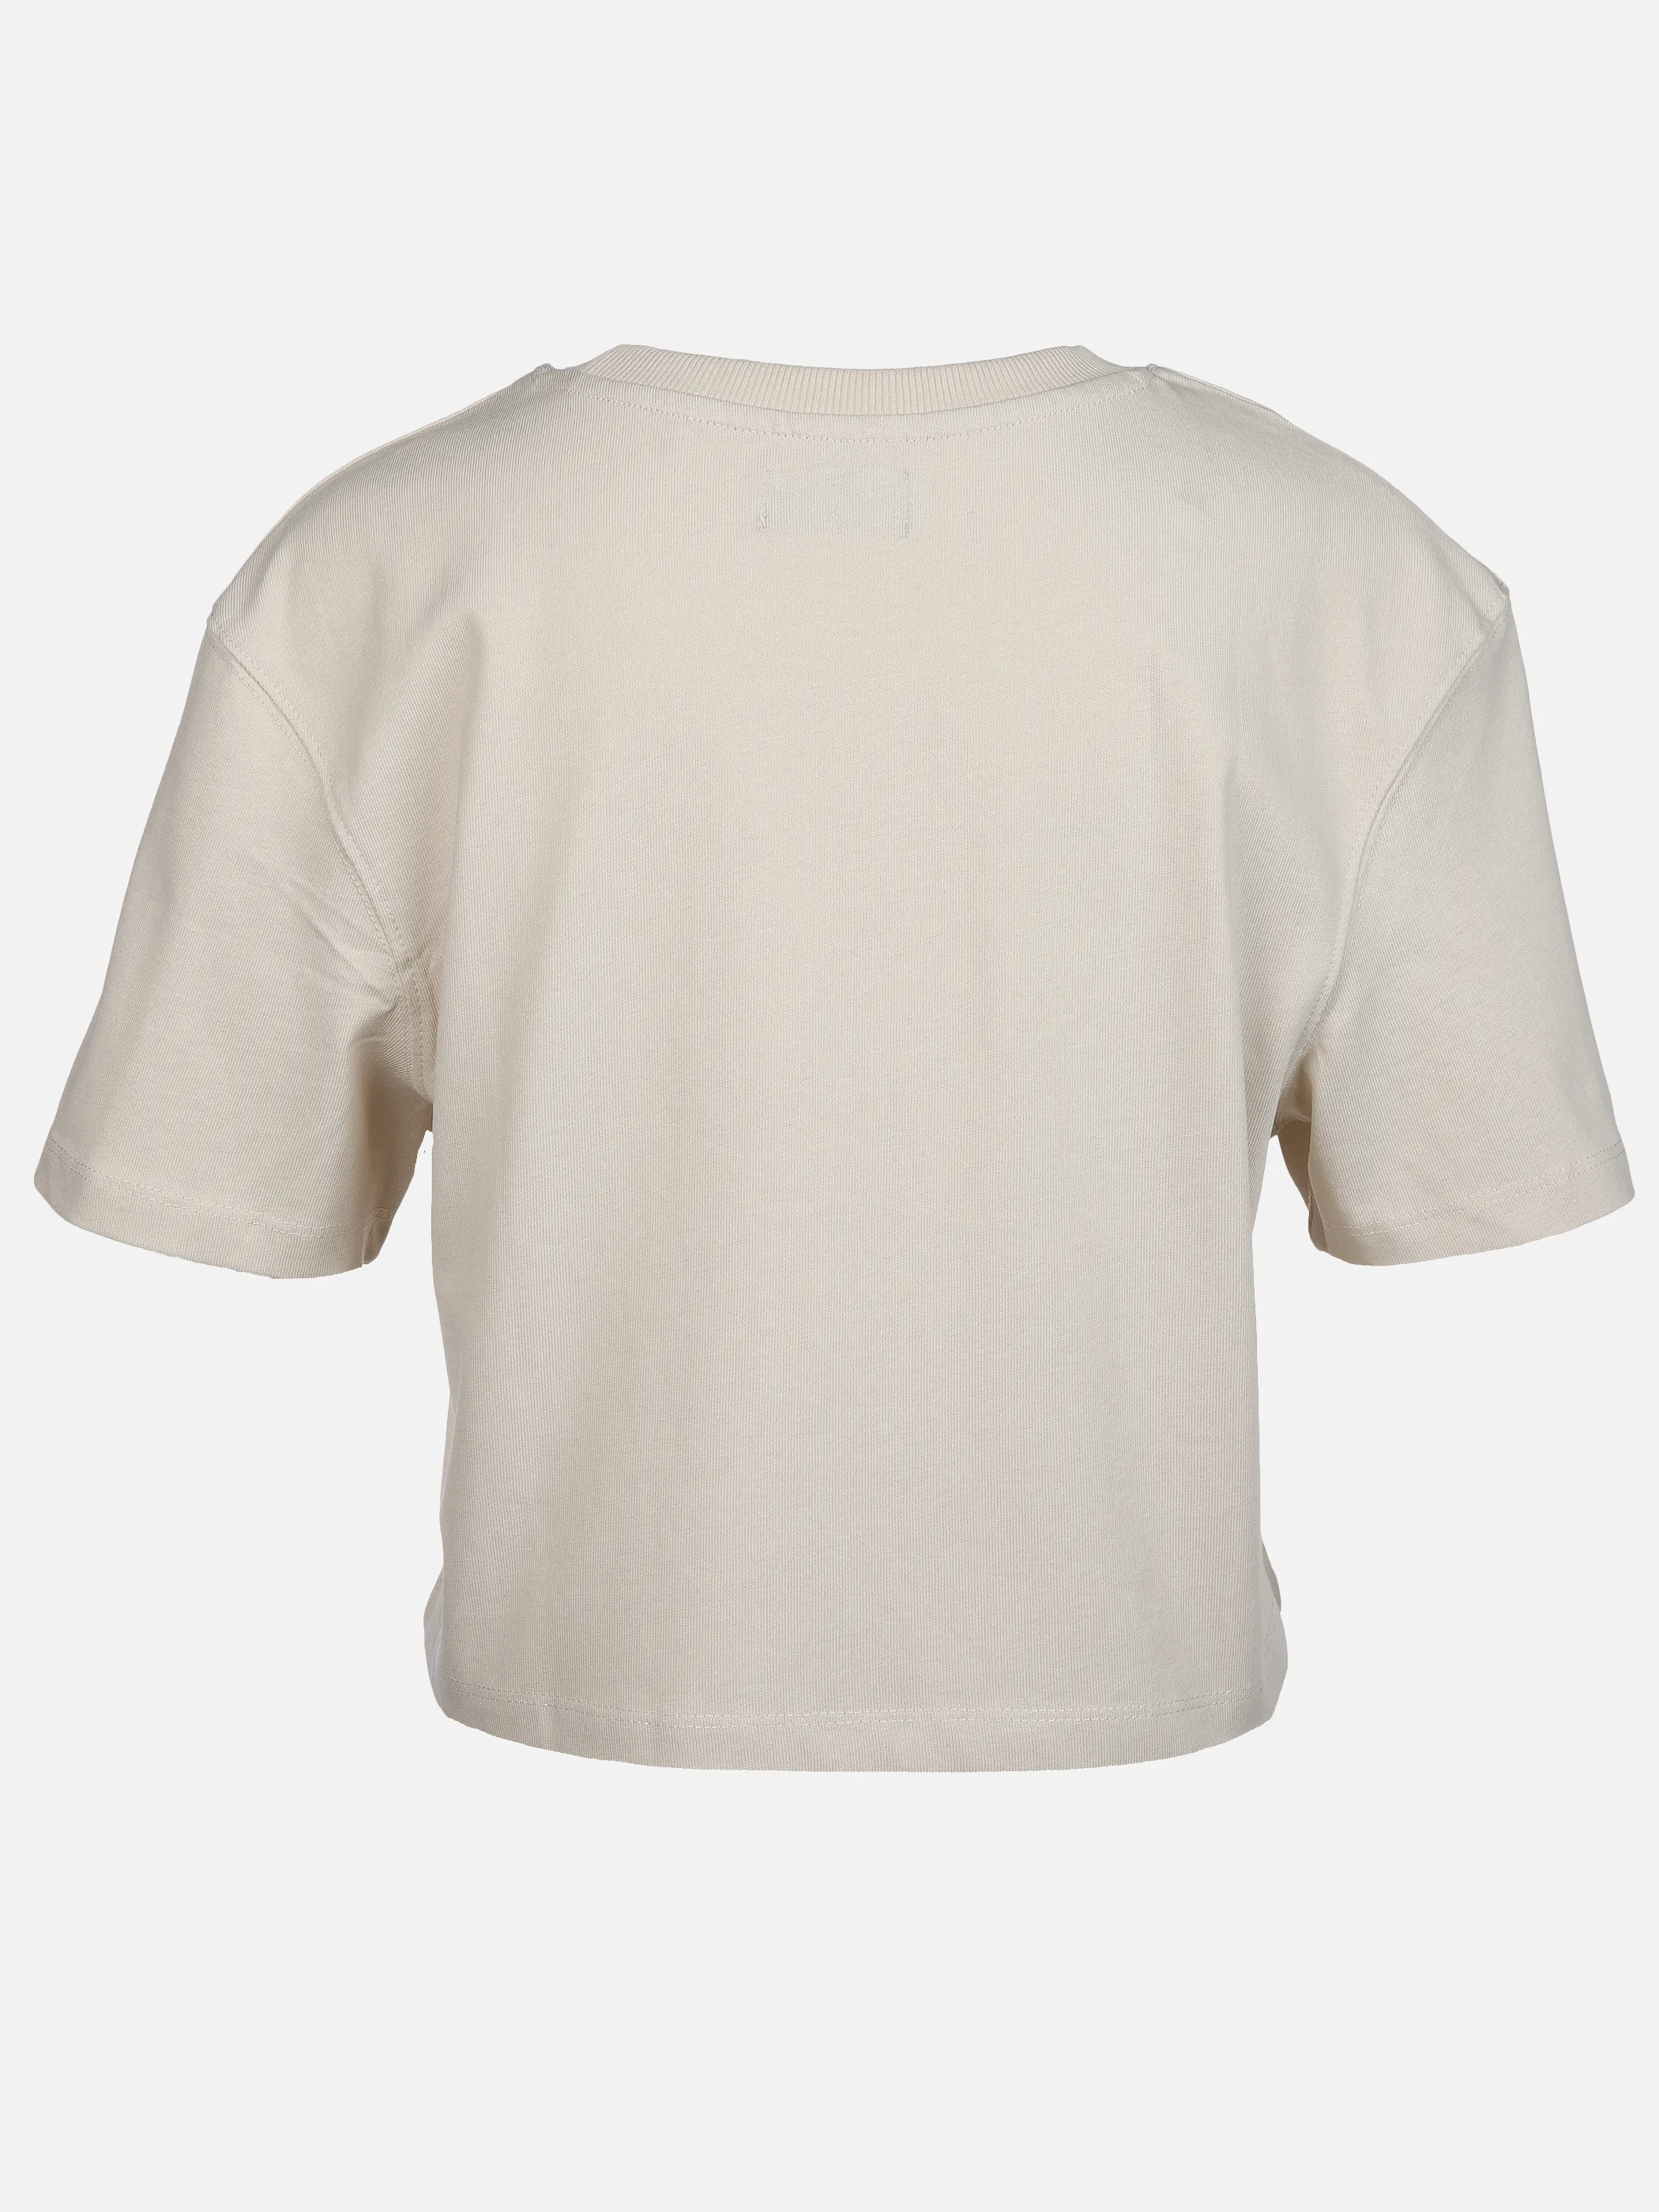 IX-O YF-Da T-Shirt Beige 890371 BEIGE 2